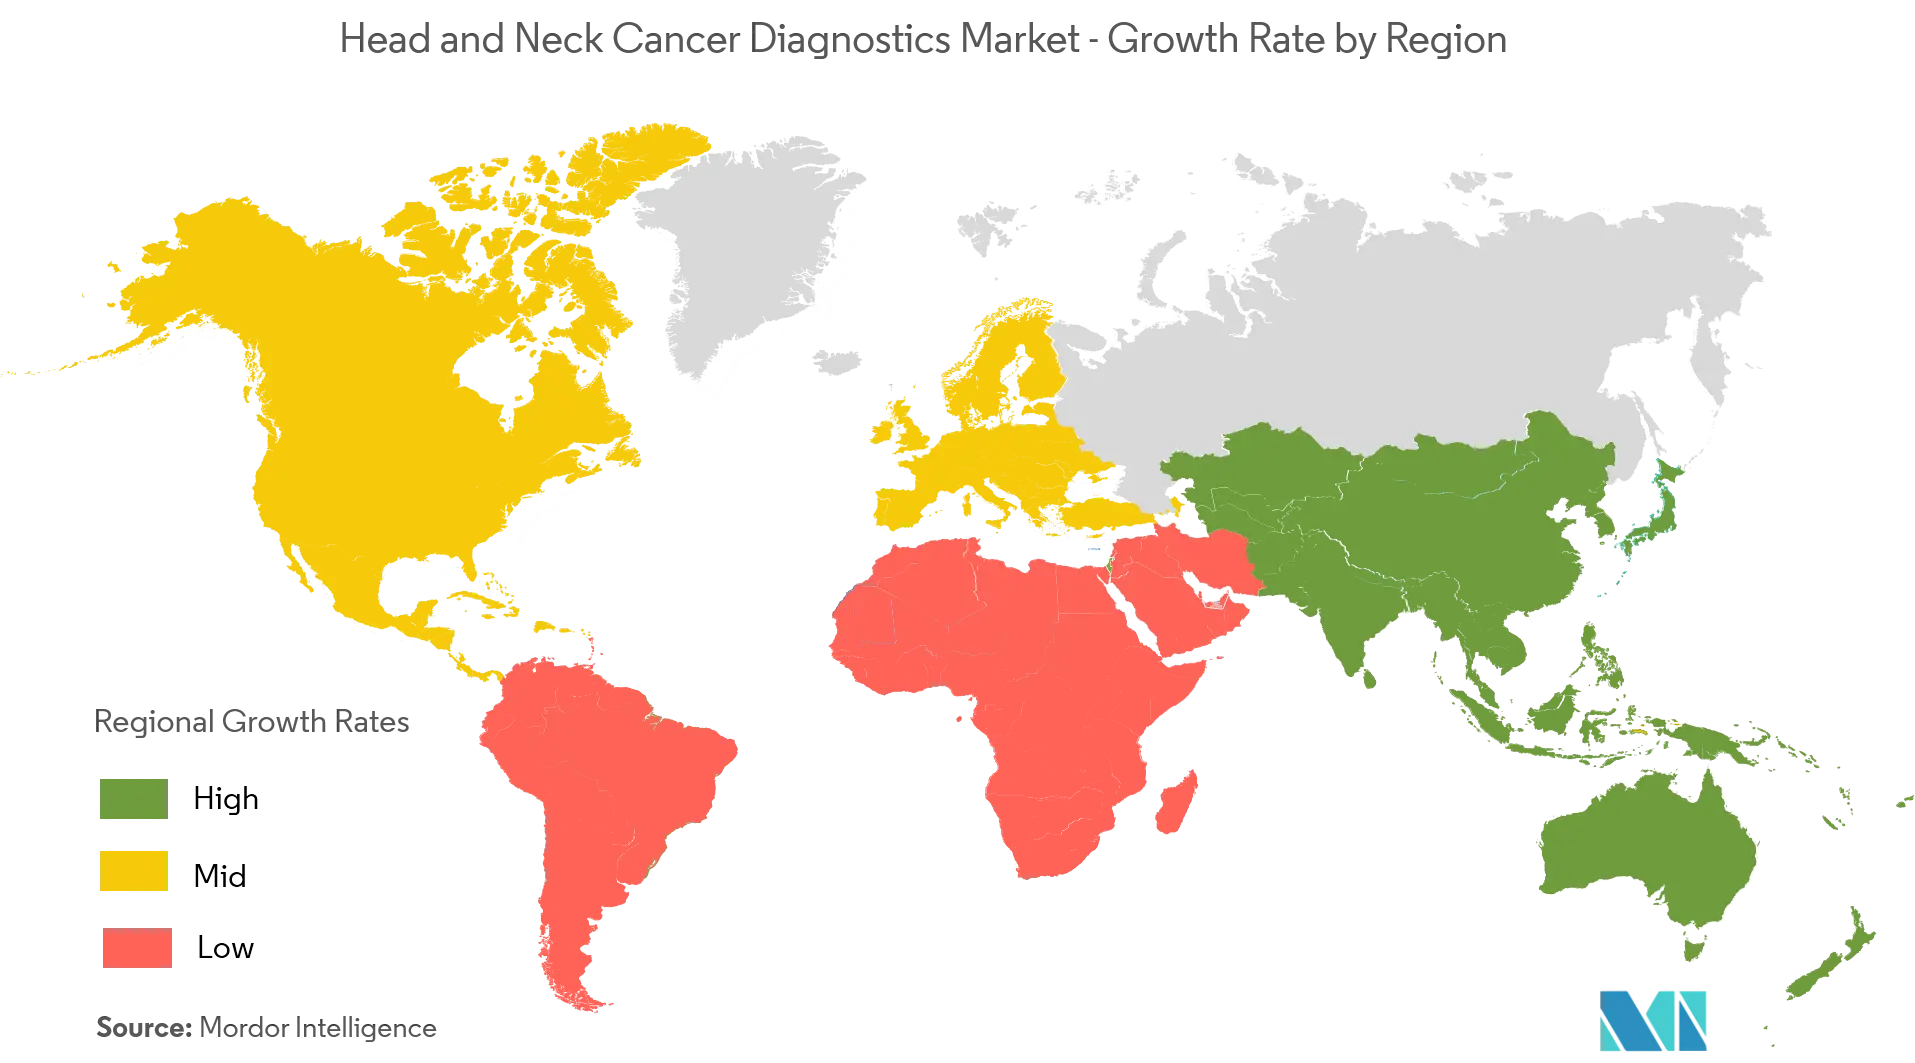 head and neck cancer diagnostics market share